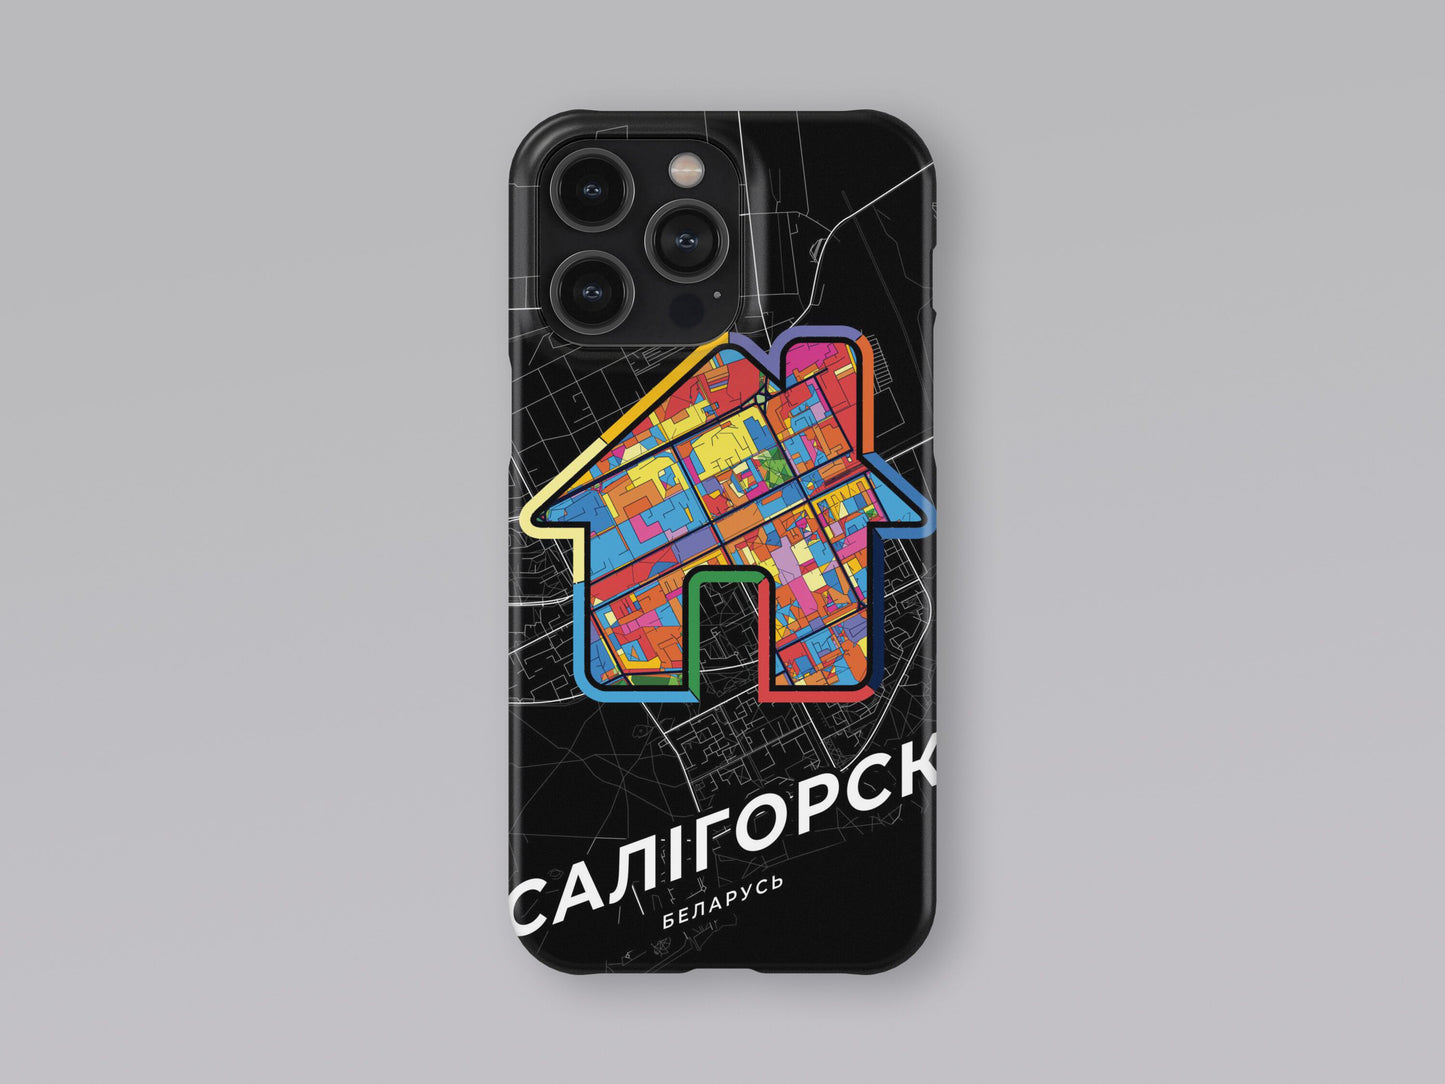 Салігорск Беларусь slim phone case with colorful icon. Birthday, wedding or housewarming gift. Couple match cases. 3